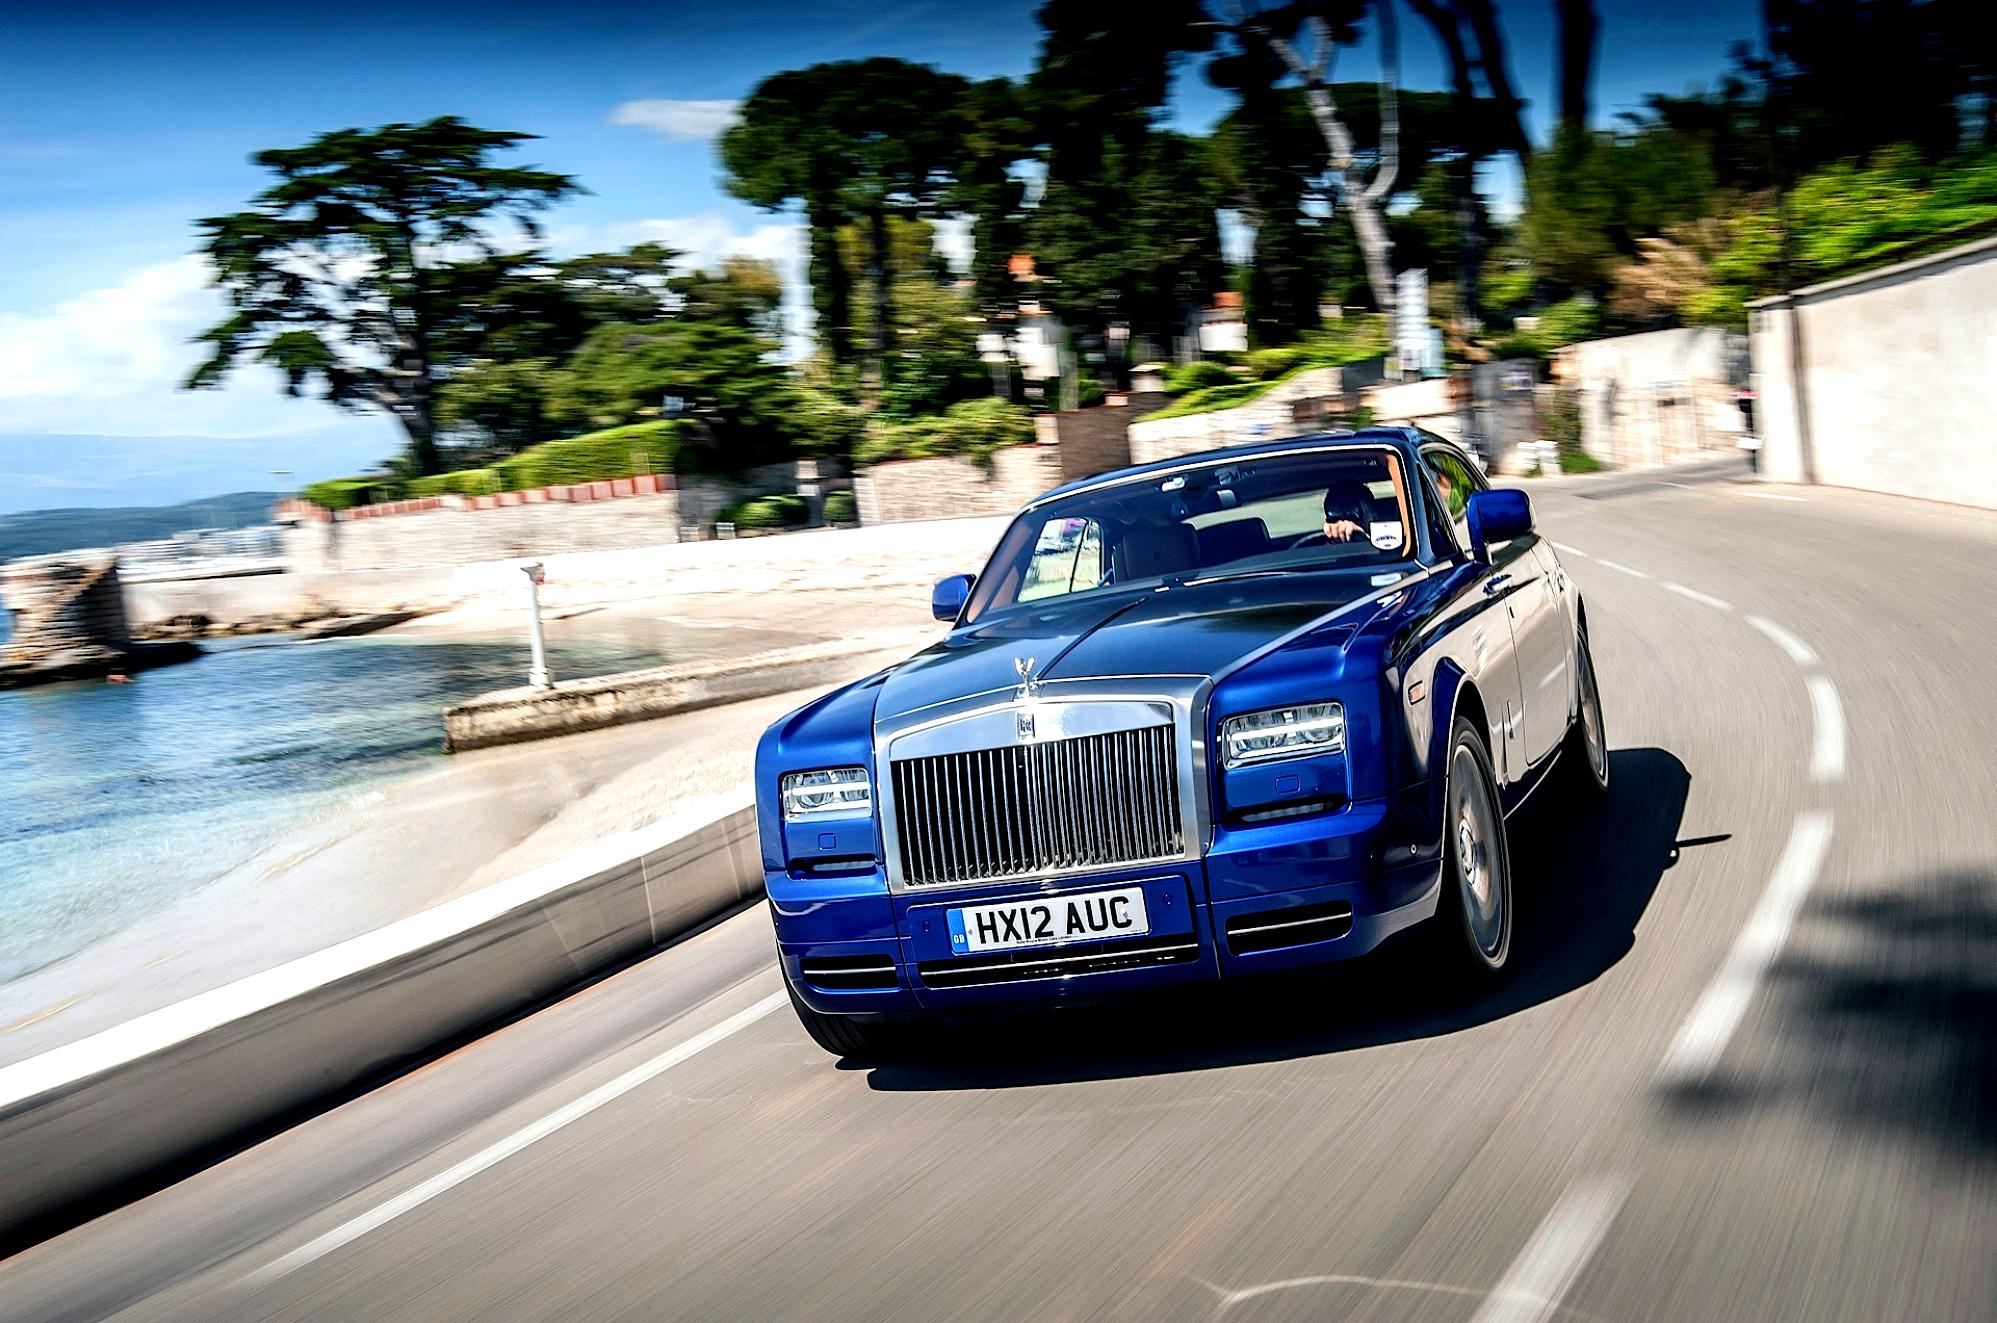 Rolls com. Rolls Royce Phantom Drophead Coupe. Роллс Ройс Фантом купе 2013. Роллс Ройс Фантом 2008. Rolls Royce Phantom купе.